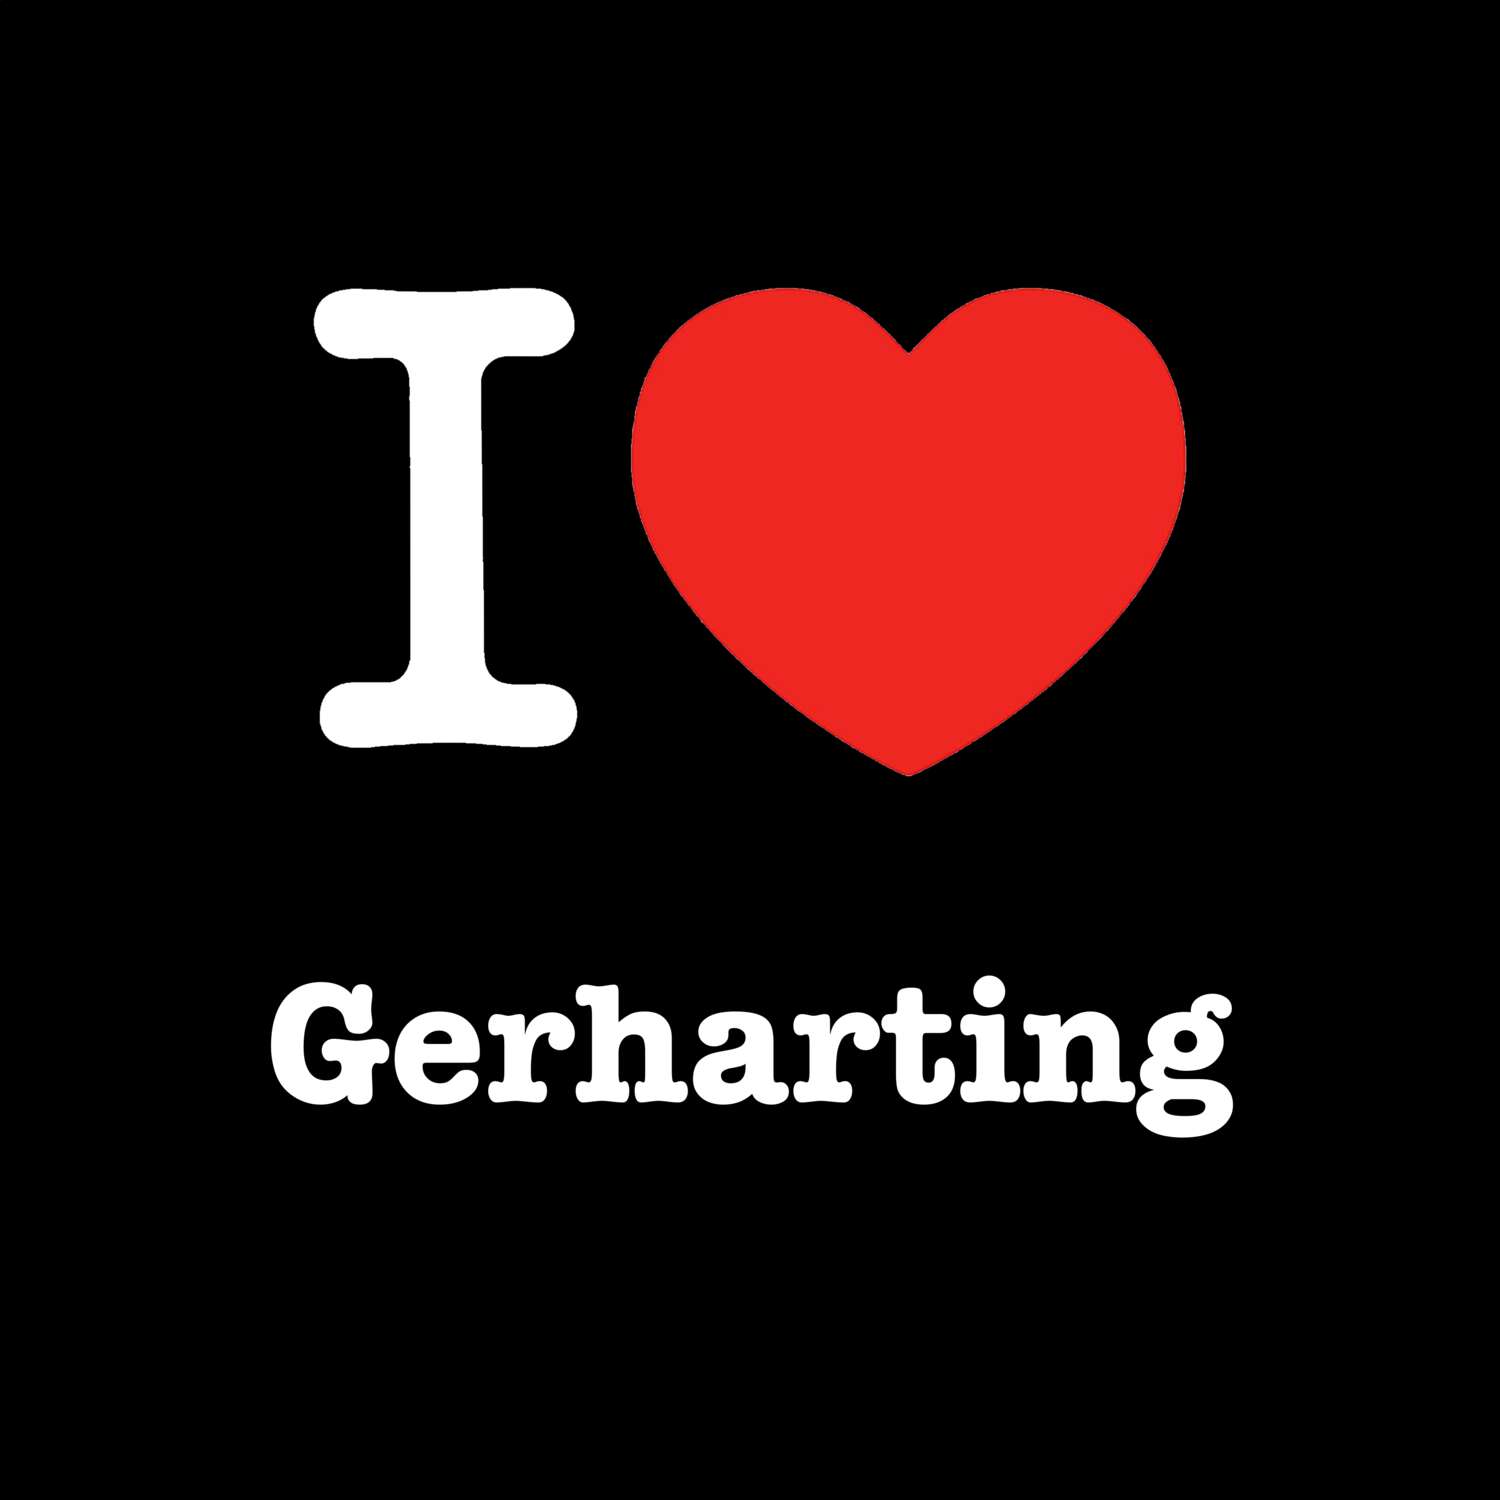 Gerharting T-Shirt »I love«